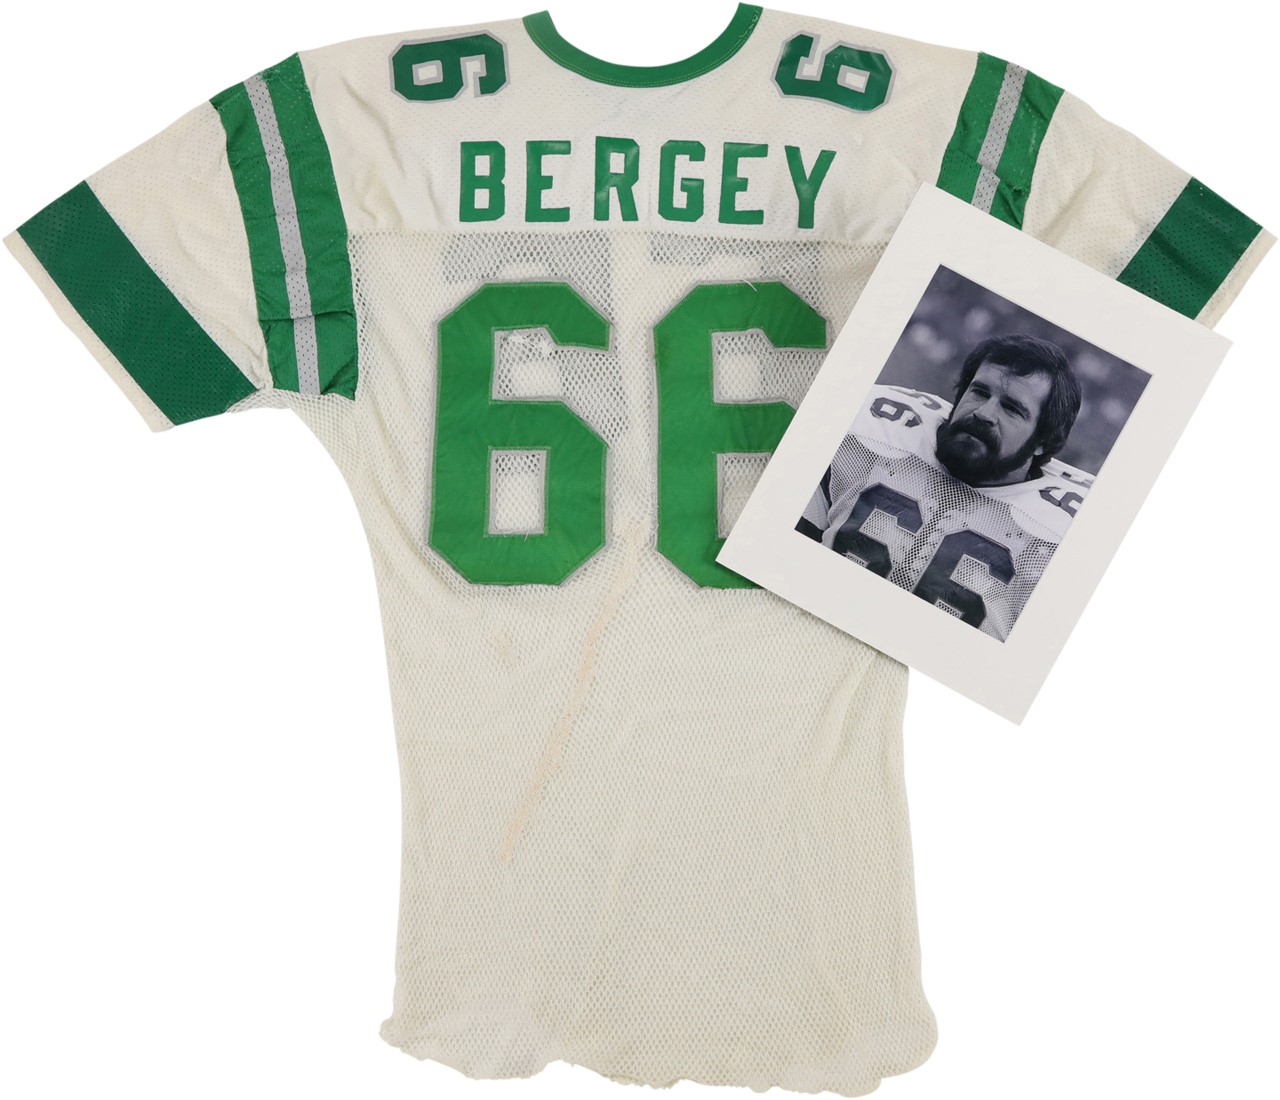 - Circa 1977 Bill Bergey Philadelphia Eagles Game Worn Jersey (Photo-Matched)